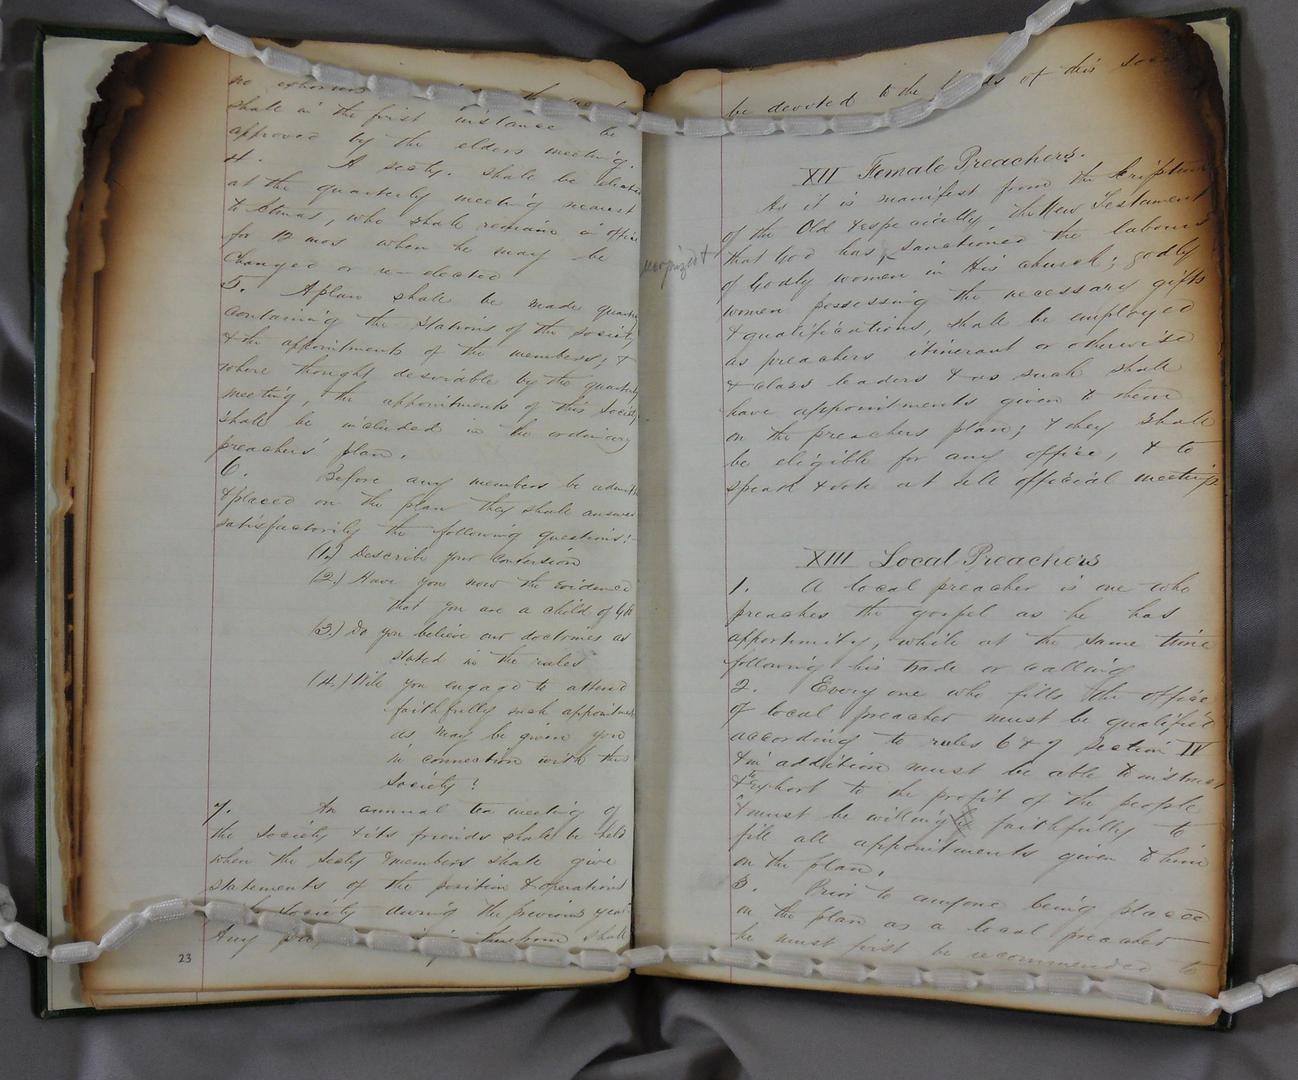 Christian Mission Minutes 1870 'Female Preachers'